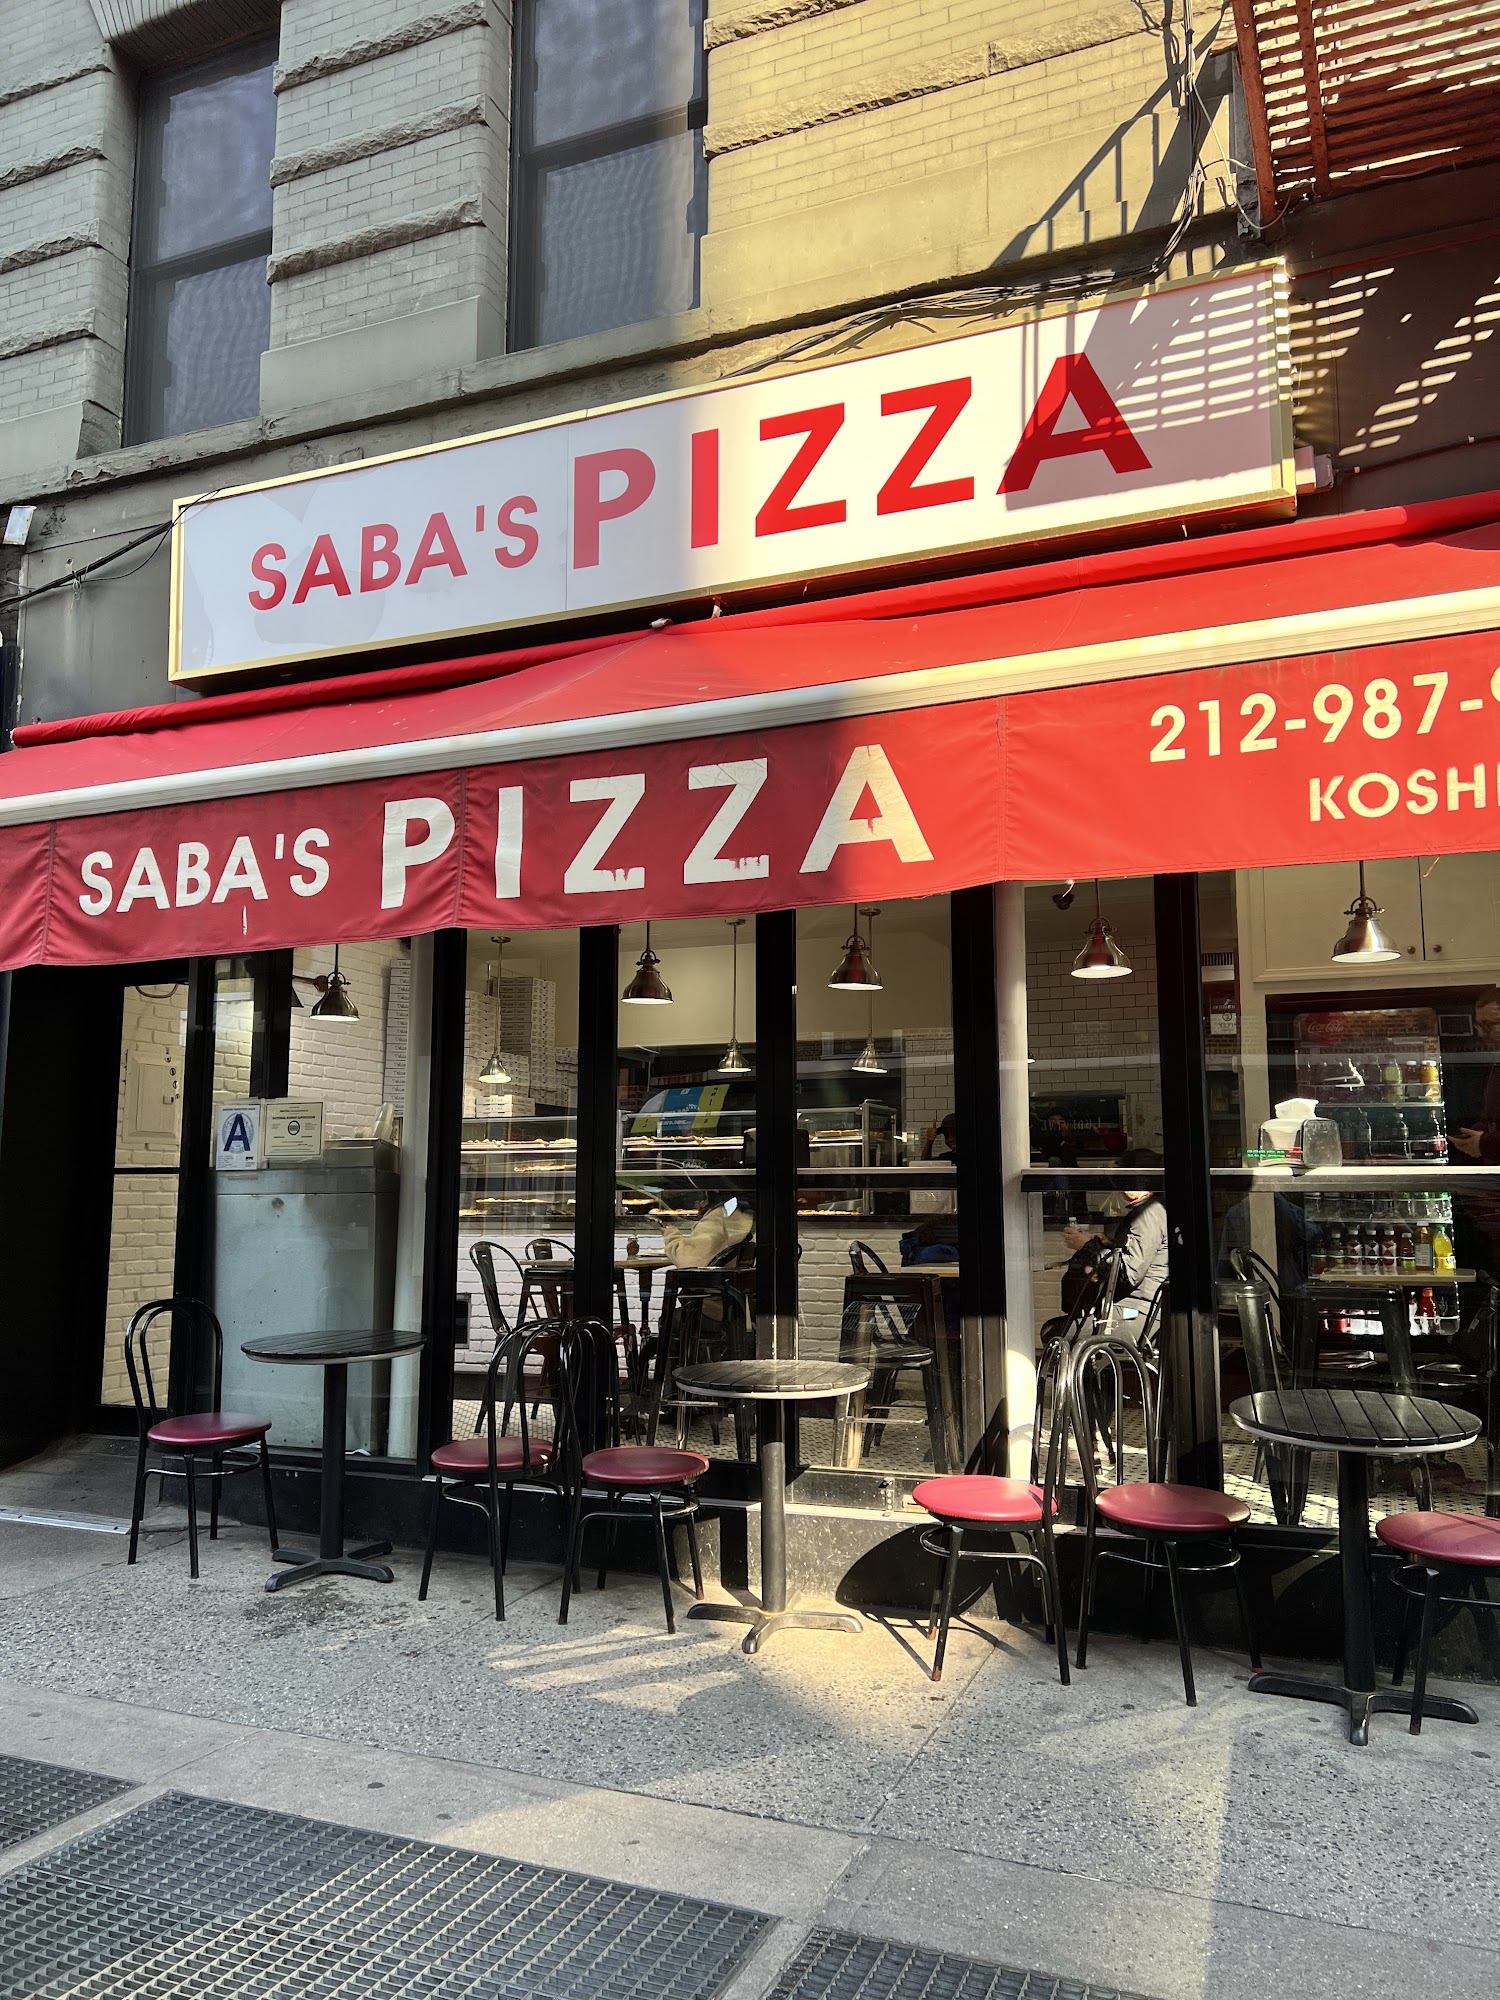 Saba's Pizza